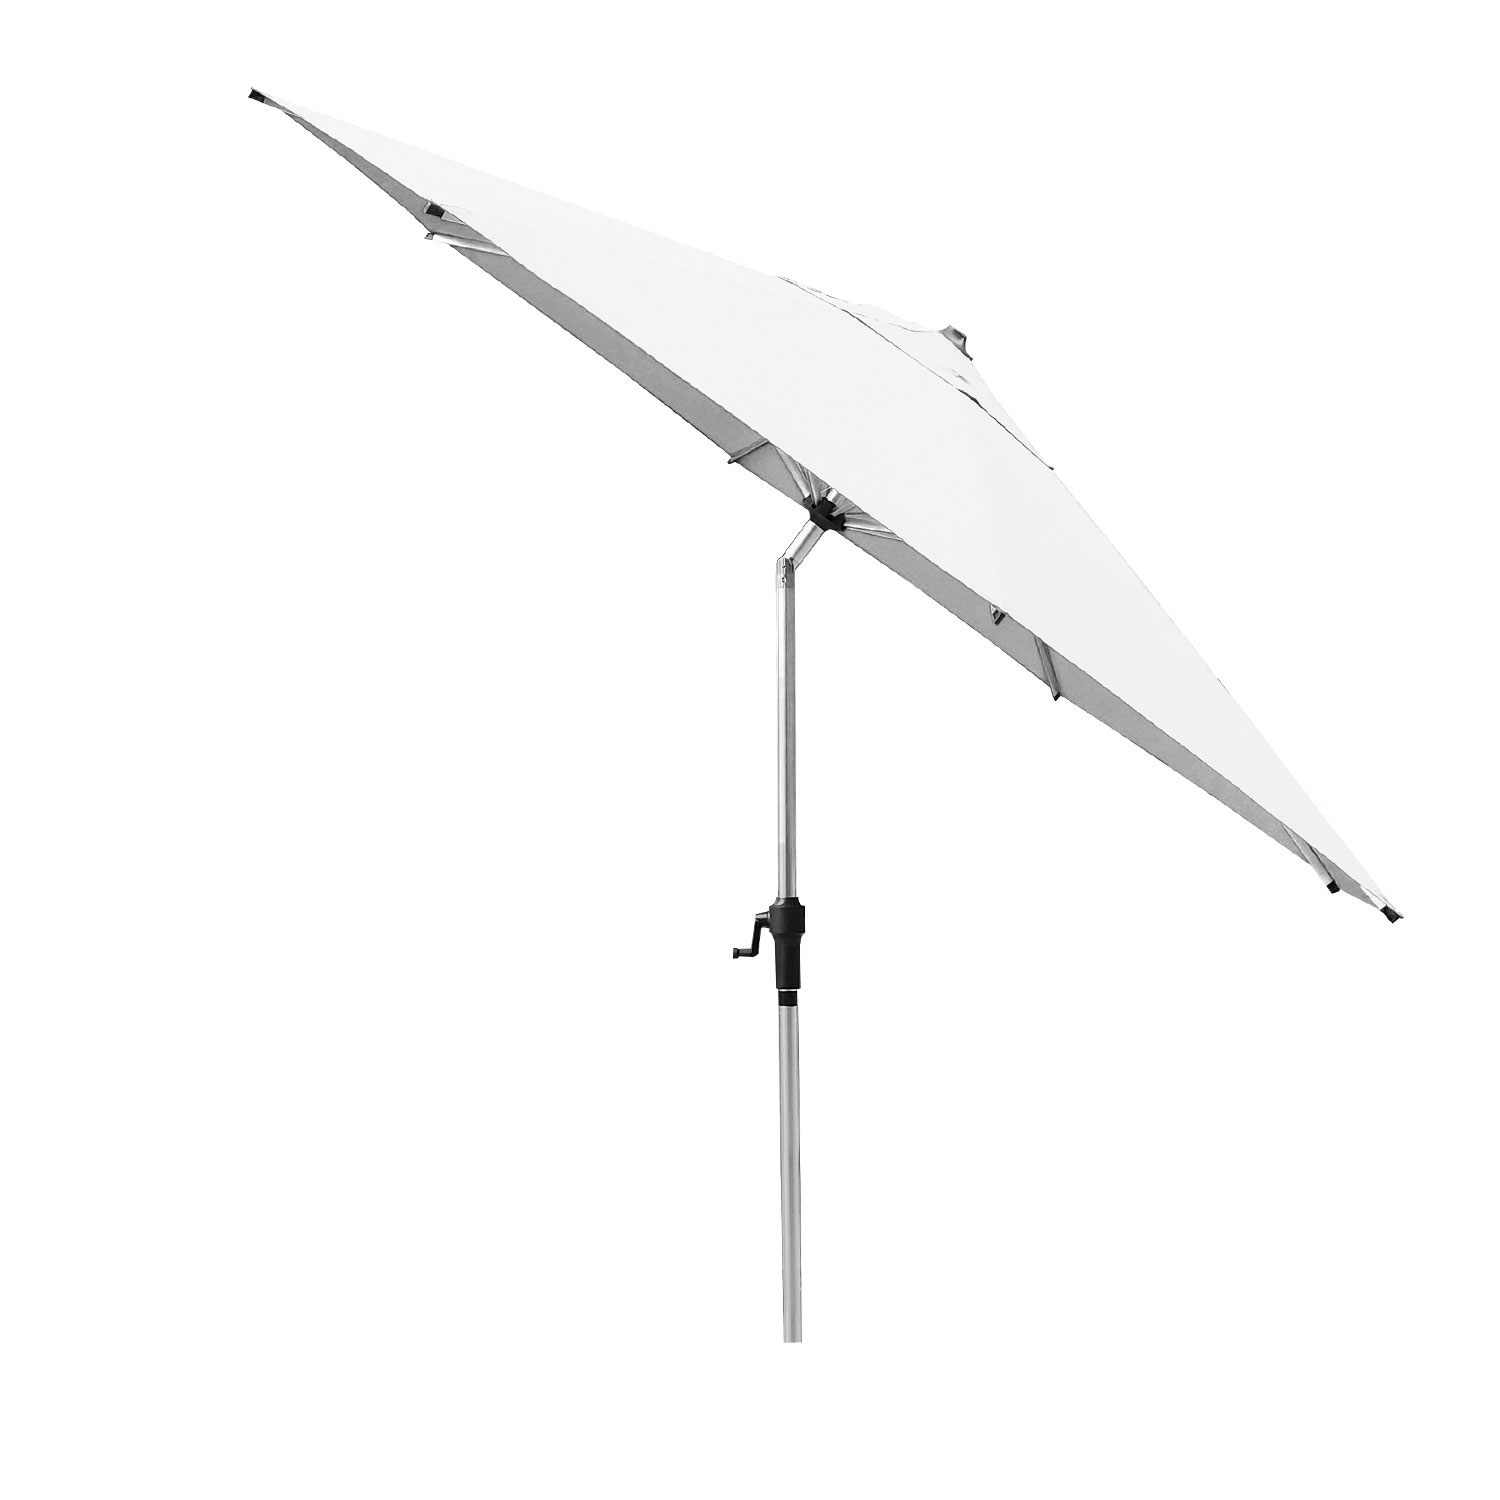 Silber Grau - anndora Sonnenschirm mit neigbarem 3,5m großem DAch hellgrau - Kurbelsystem - Schirm neigbar - 8 Streben - Schirm waschbar von anndora-sonnenschirm.de